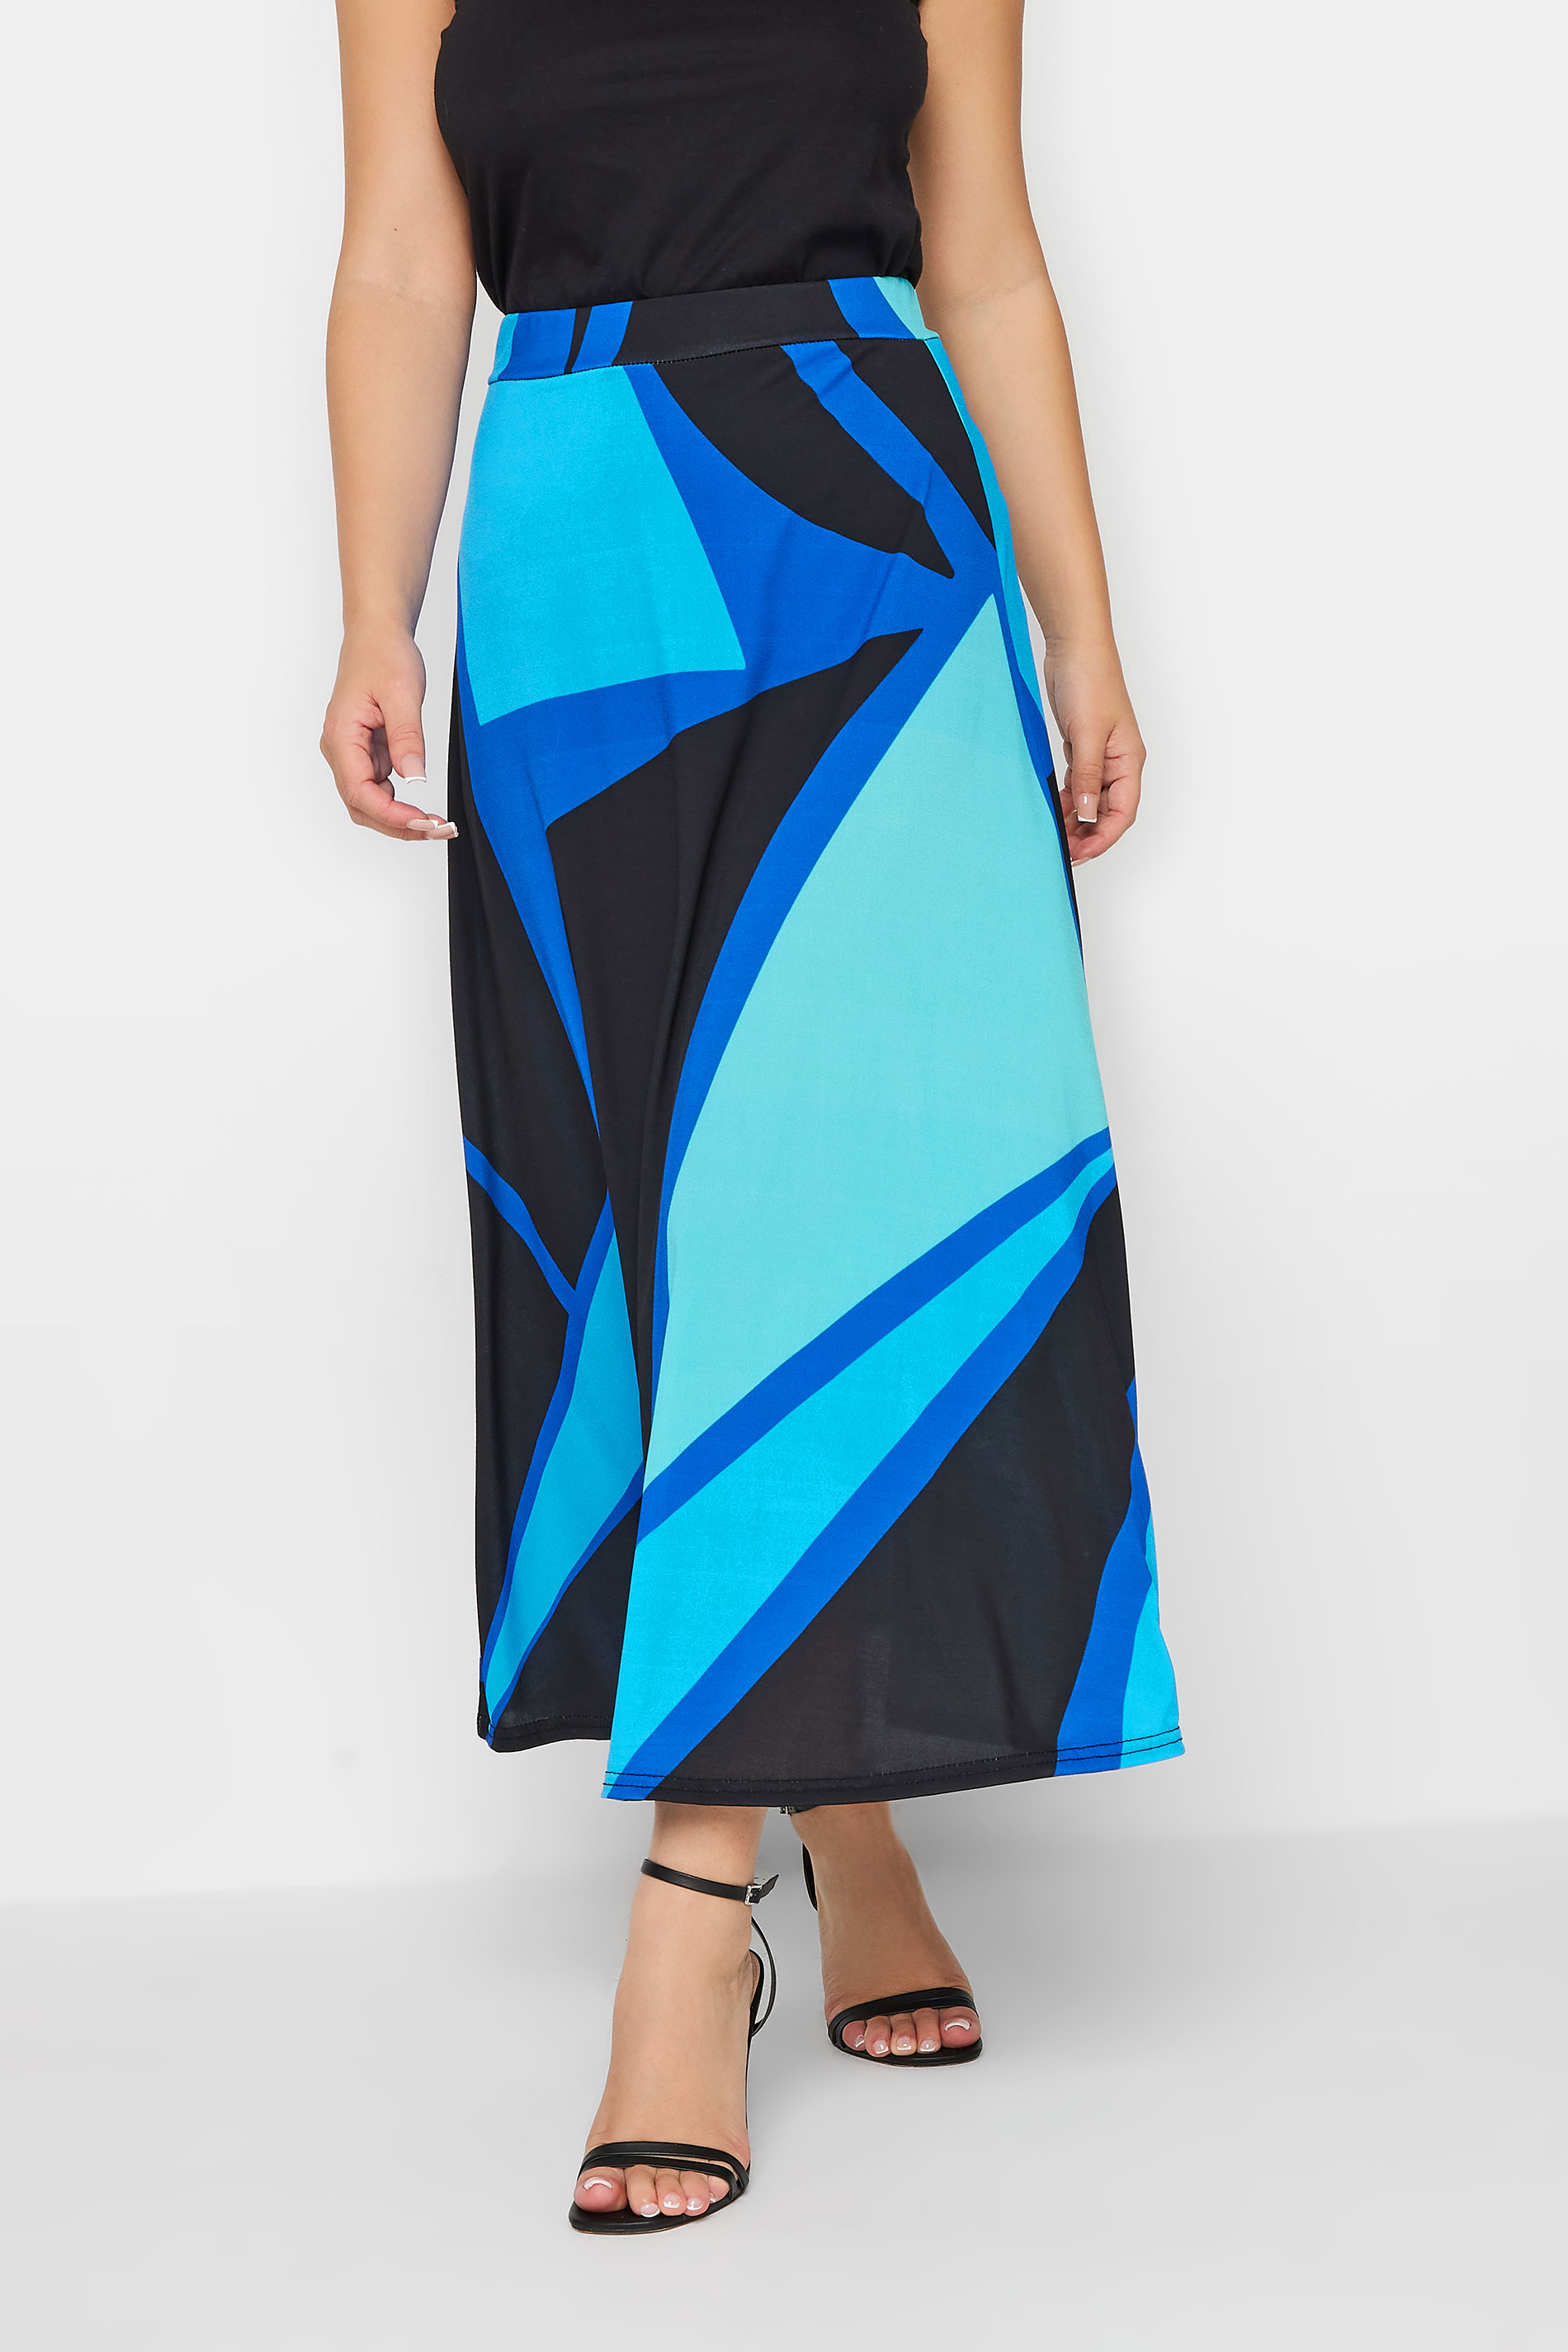 PixieGirl Blue & Black Colour Block Midaxi Skirt | PixieGirl 1